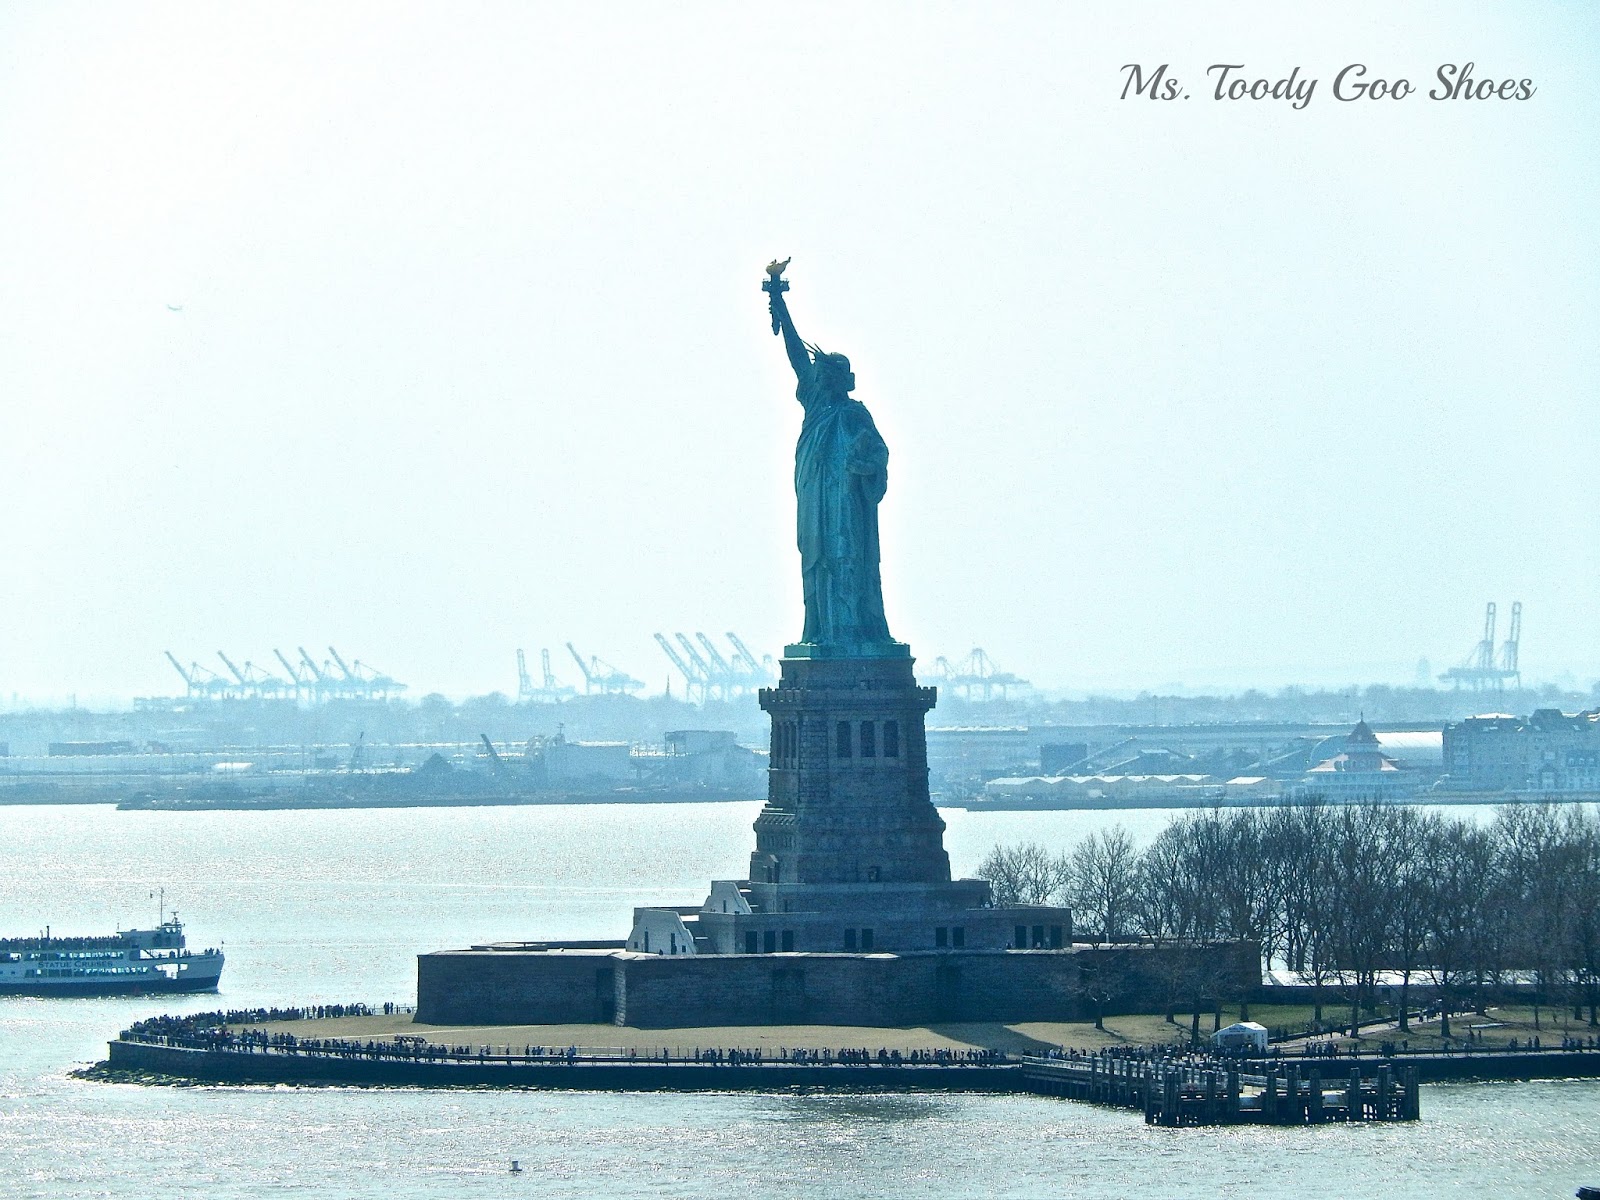 Statue of Liberty from Norwegian Breakaway Cruise Ship  --- Ms. Toody Goo Shoes